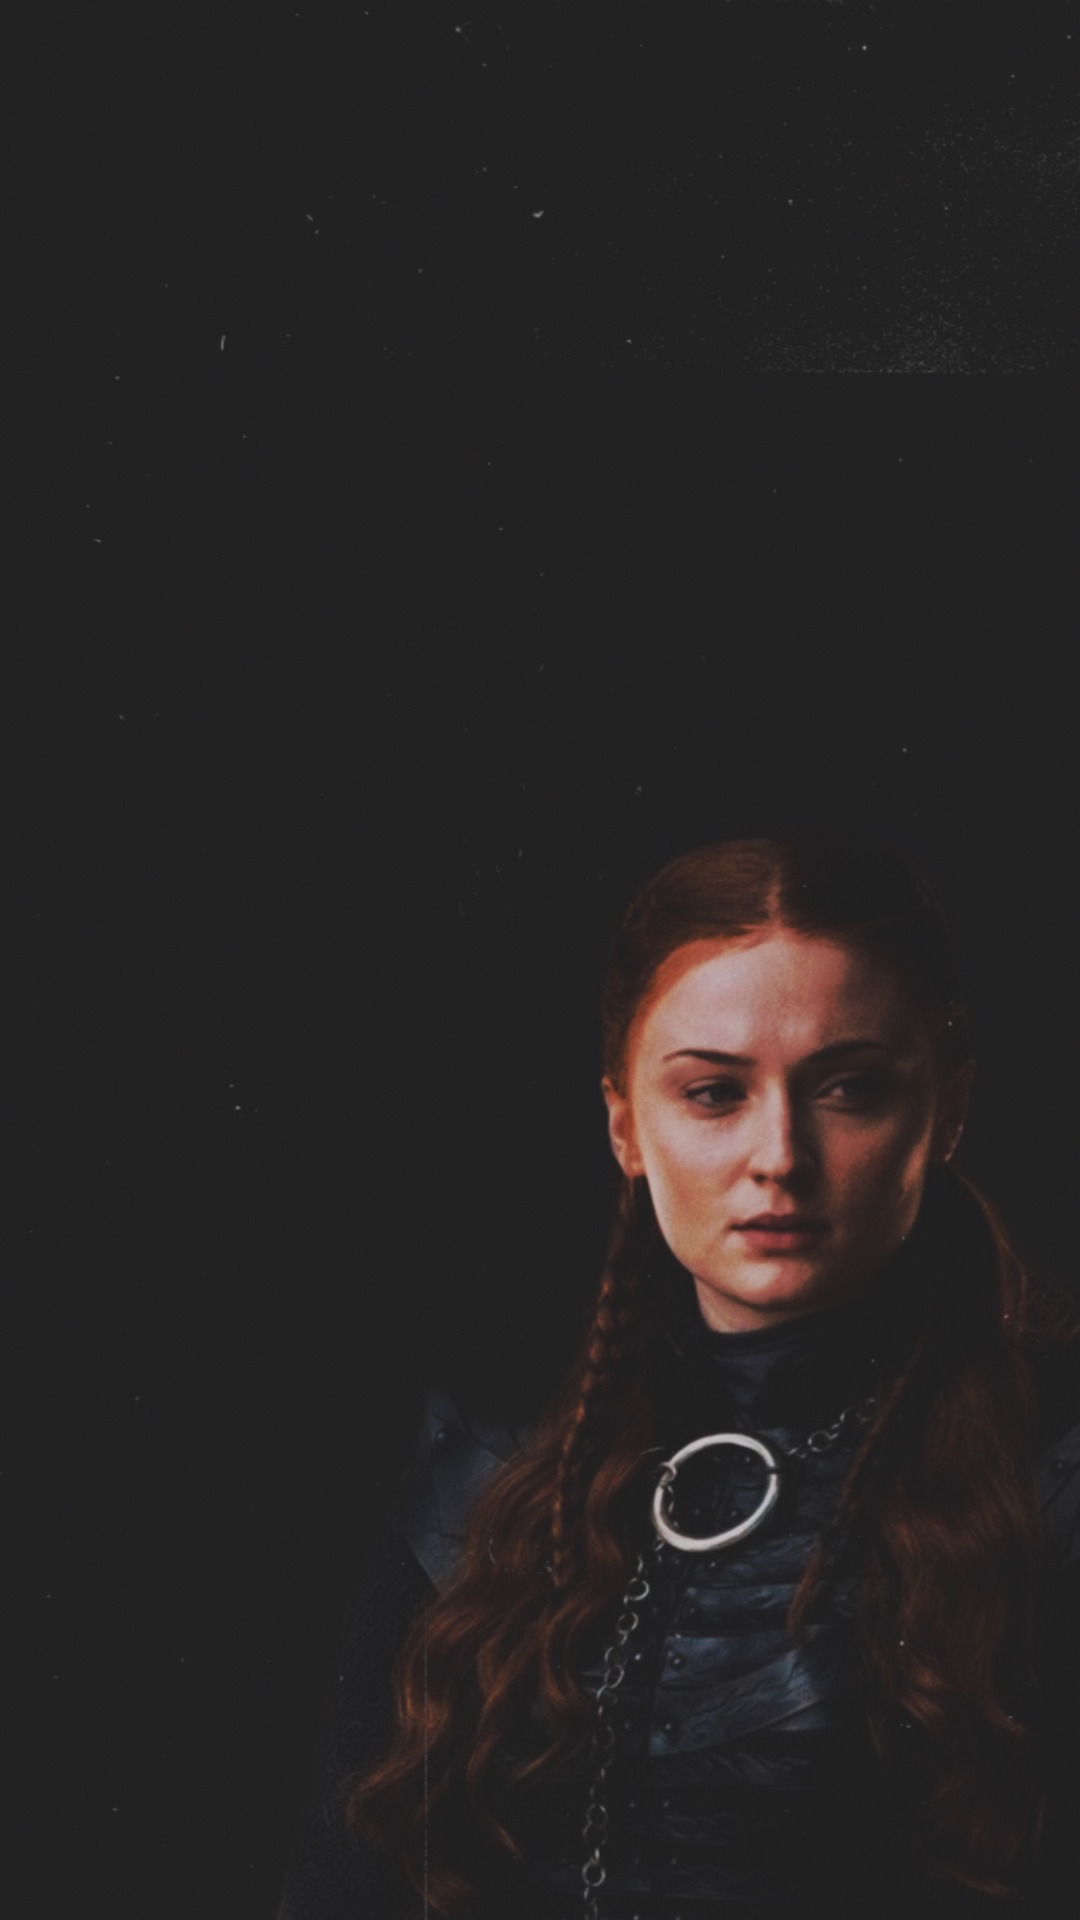 Sansa Stark Queen In The North Wallpapers